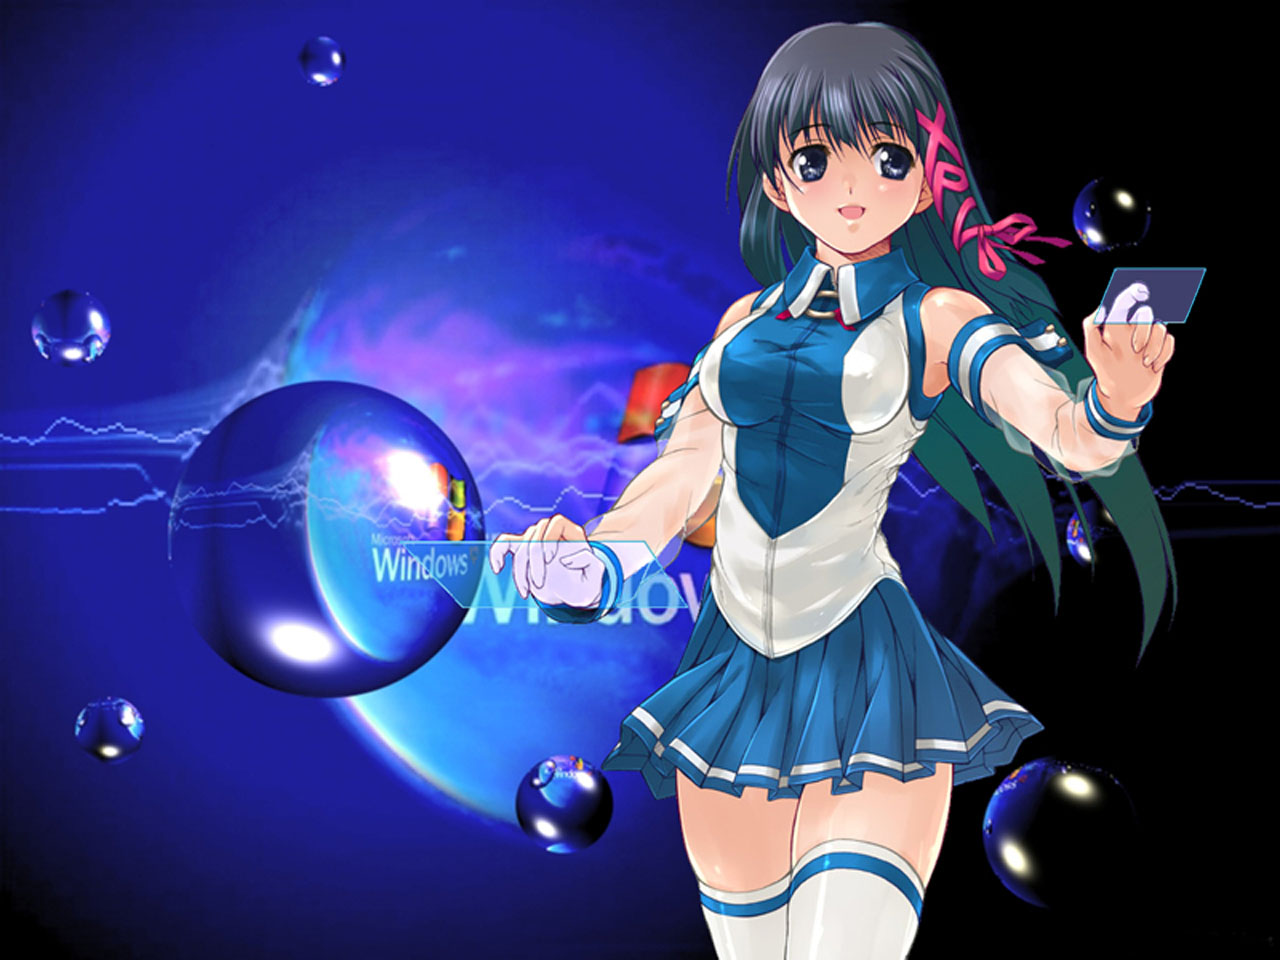 Anime Wallpaper for Windows 10 - WallpaperSafari